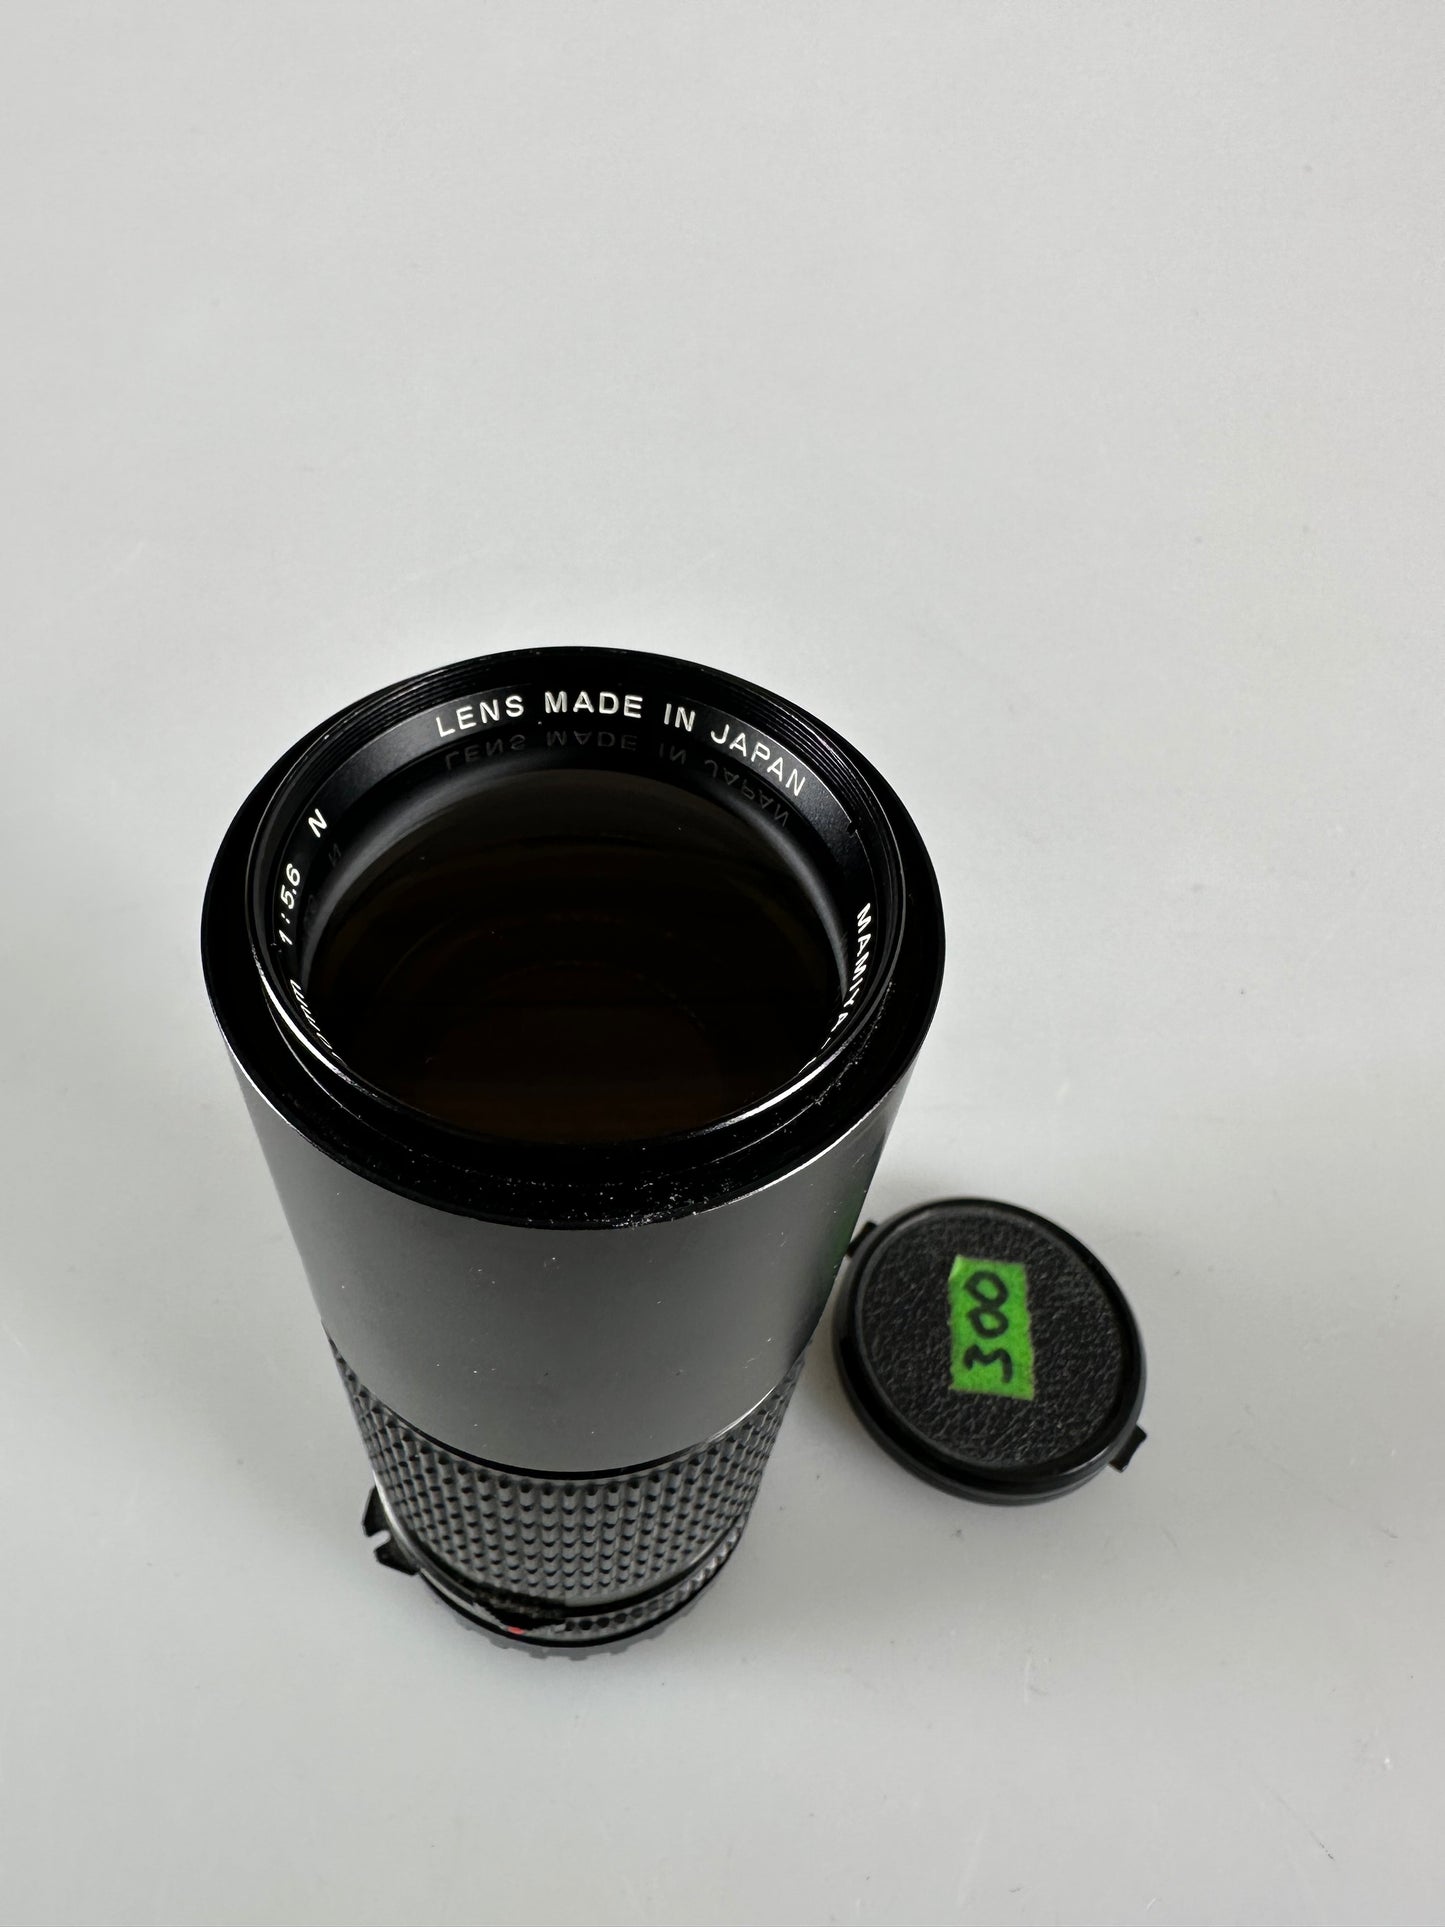 Mamiya Sekor ULD C 300mm f5.6 N Lens M645 1000S Pro TL